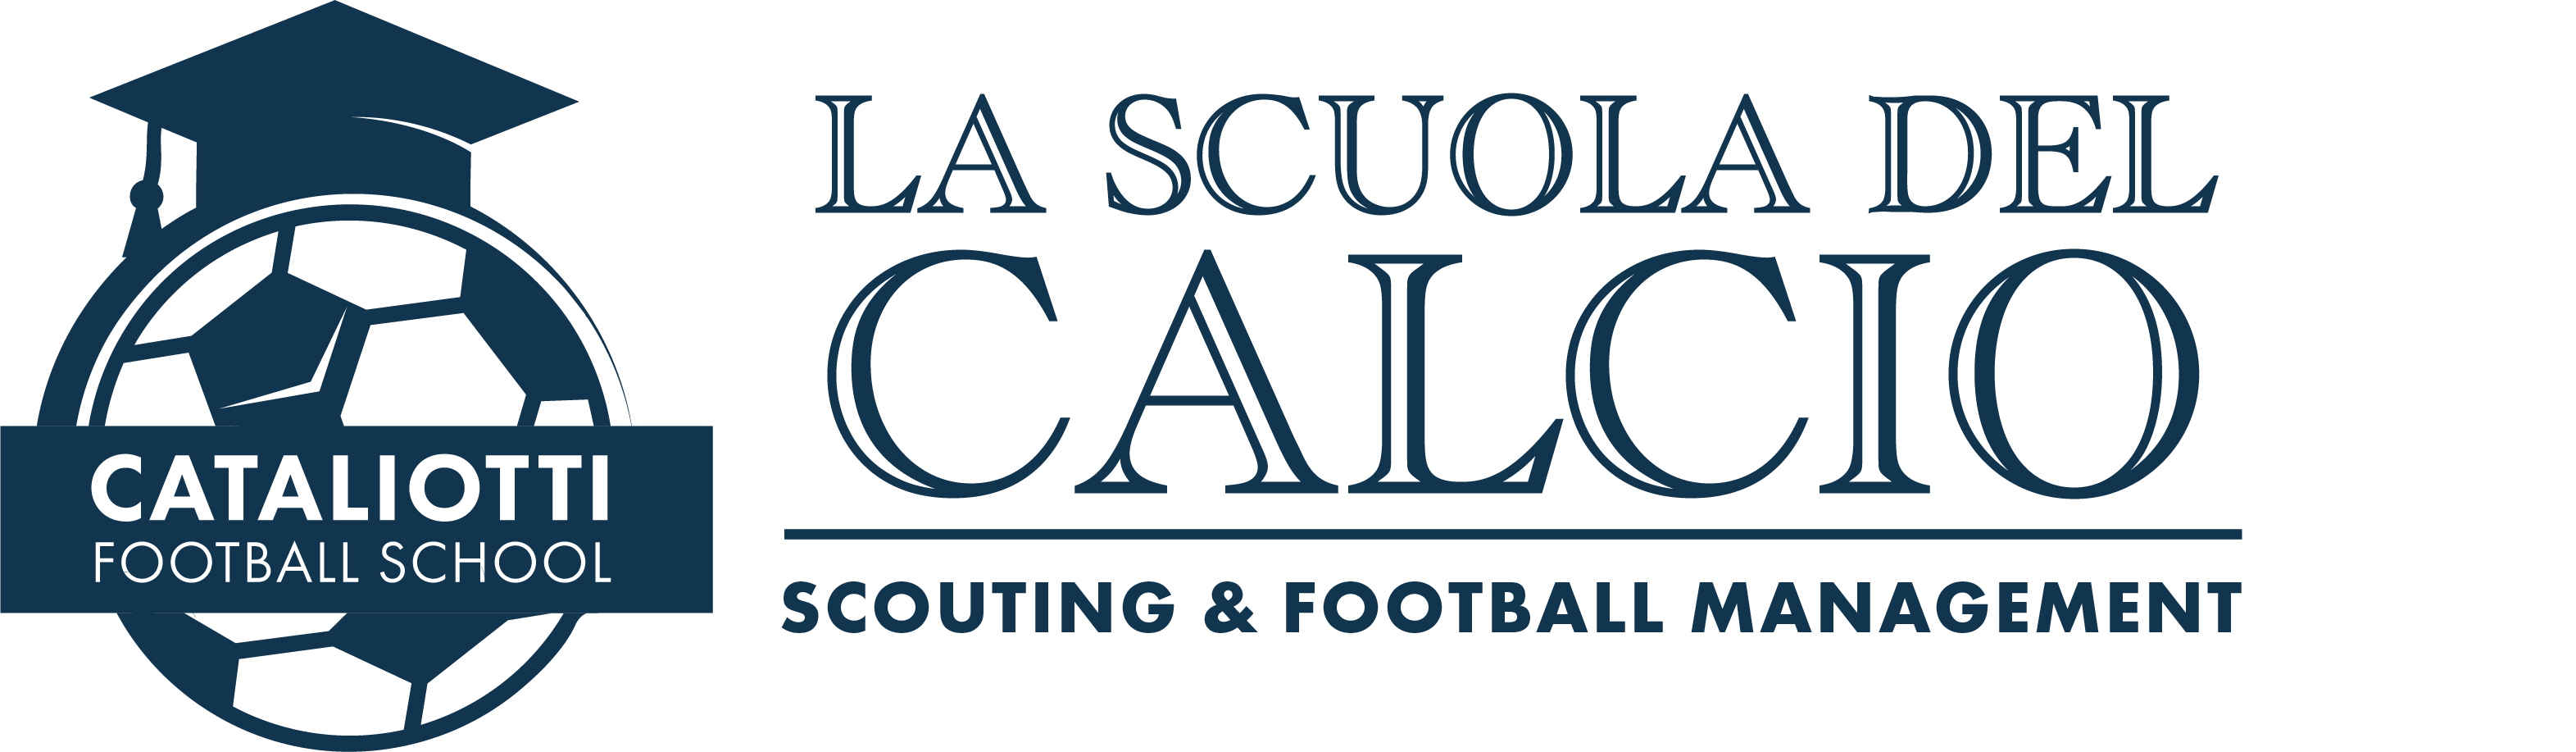 Cataliotti Football School